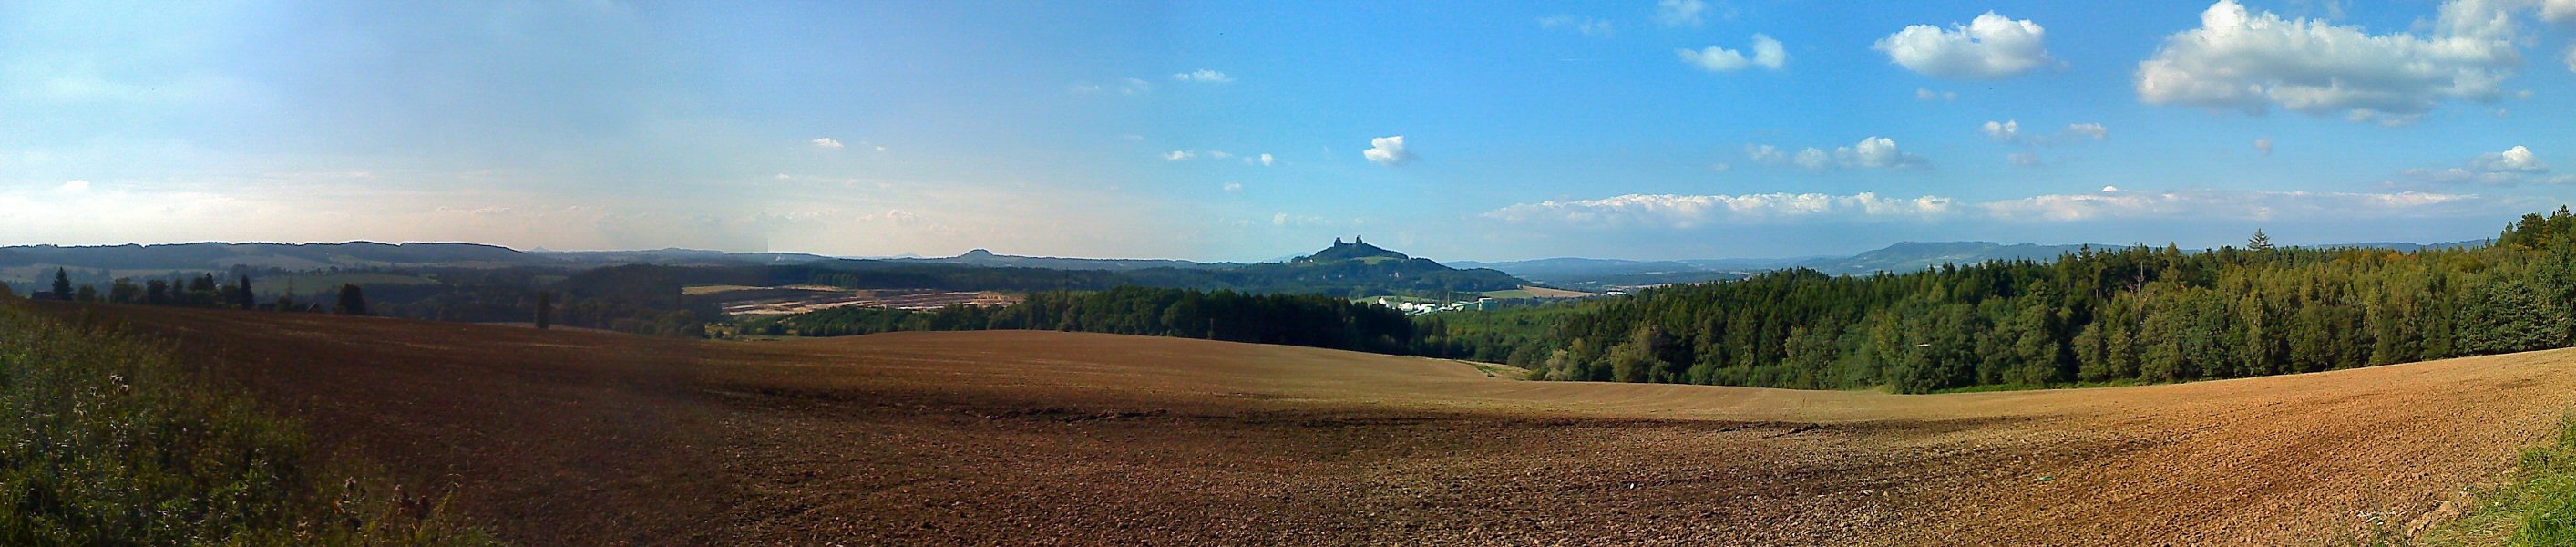 91 panorama ze Střelče